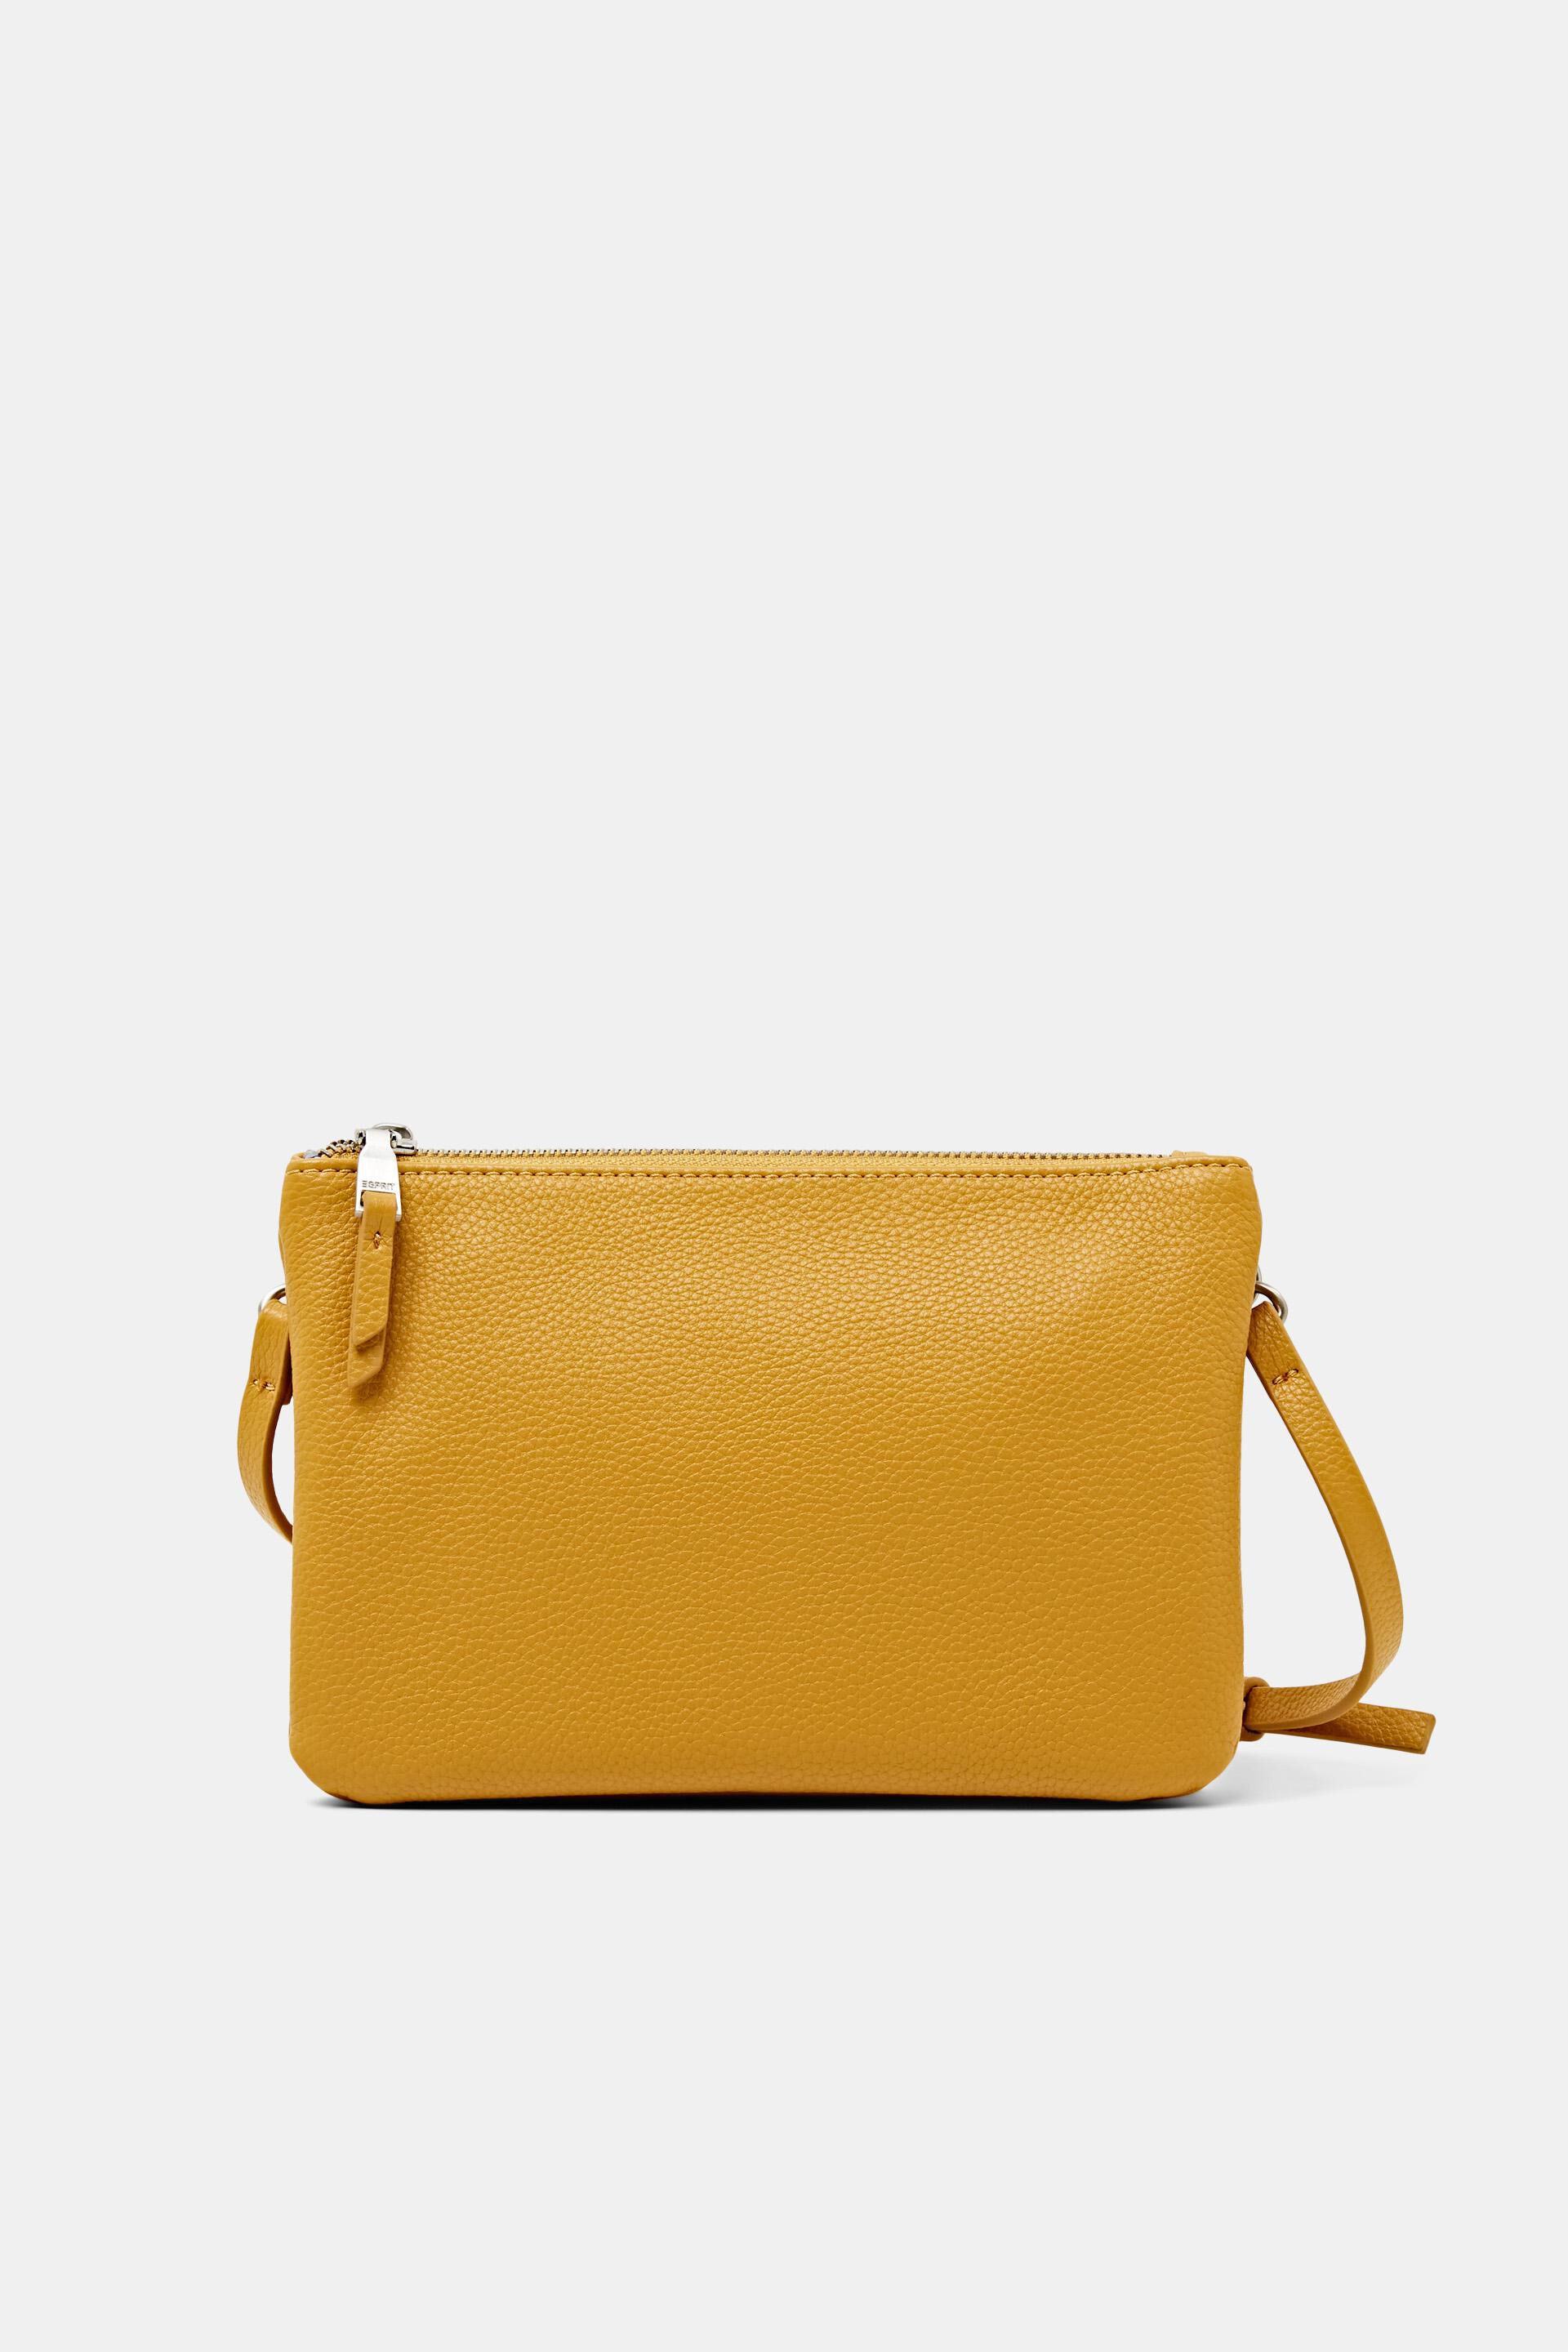 Esprit Online Store Bags